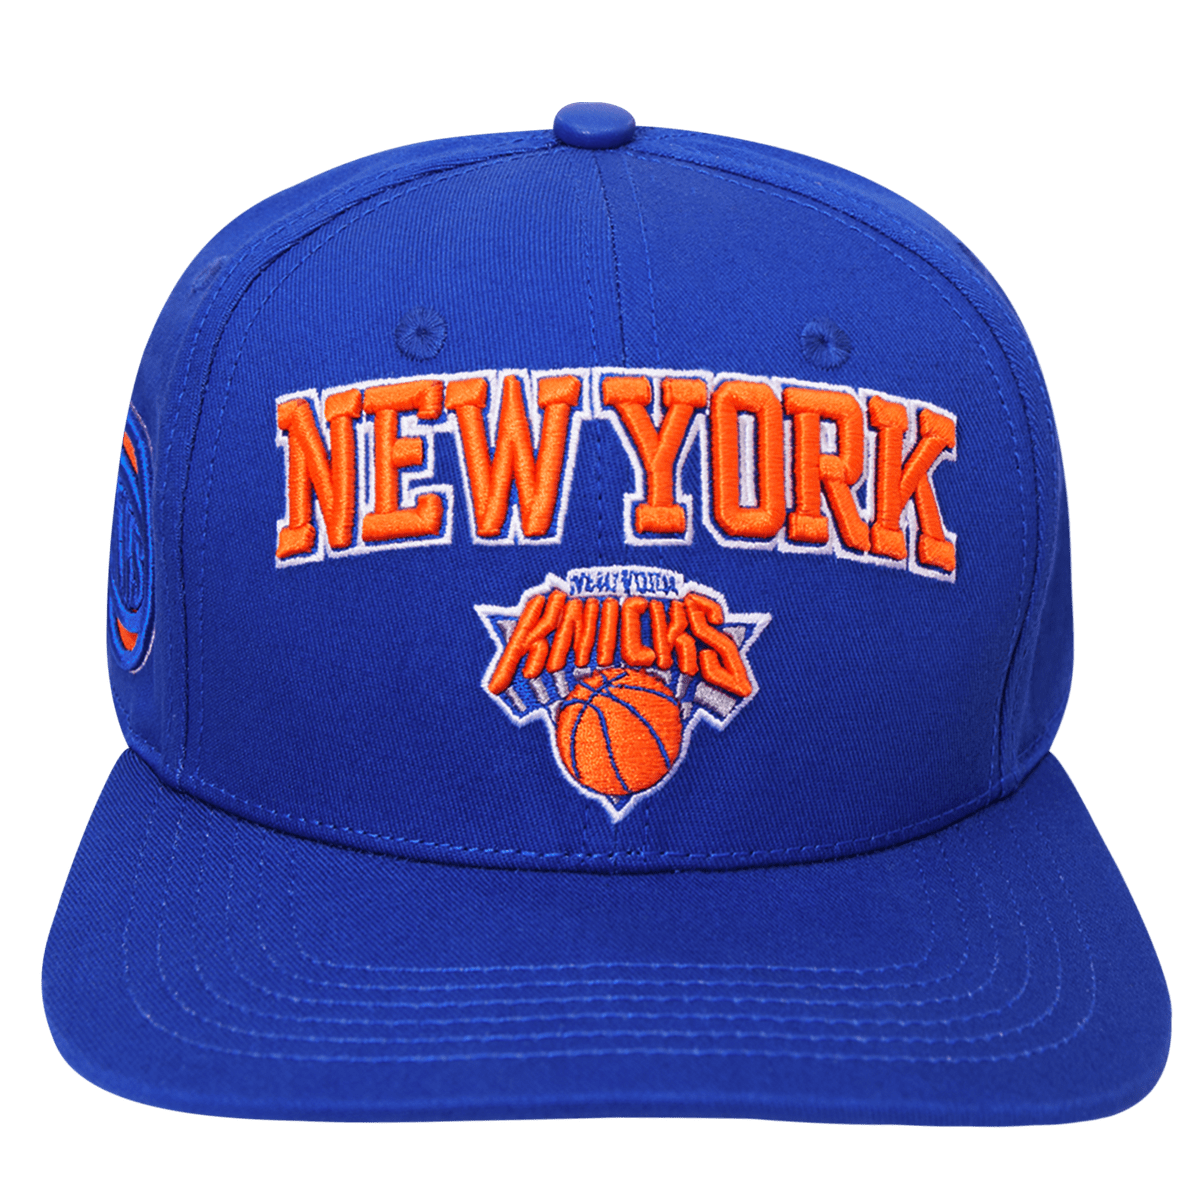 NBA NEW YORK KNICKS LOGO MESH UNISEX SNAPBACK HAT (ROYAL BLUE